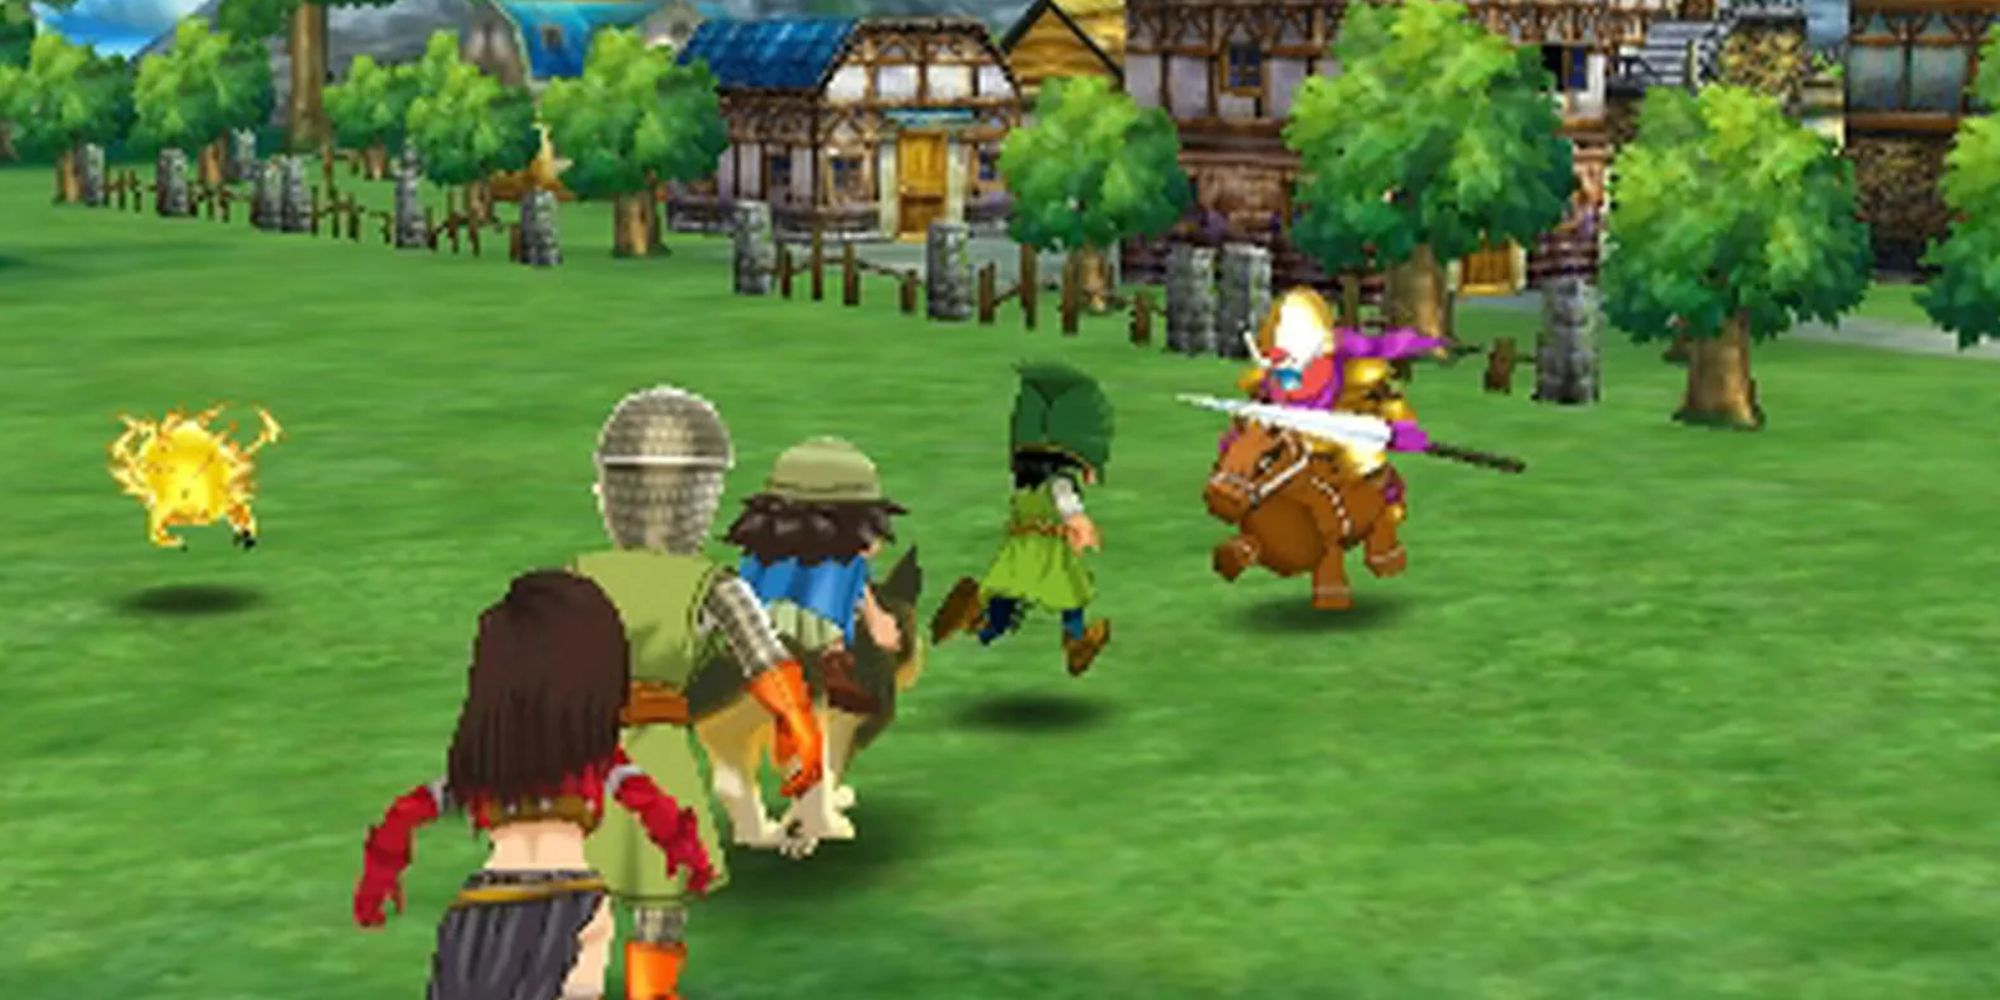 Dragon Quest 7 exploring the overworld